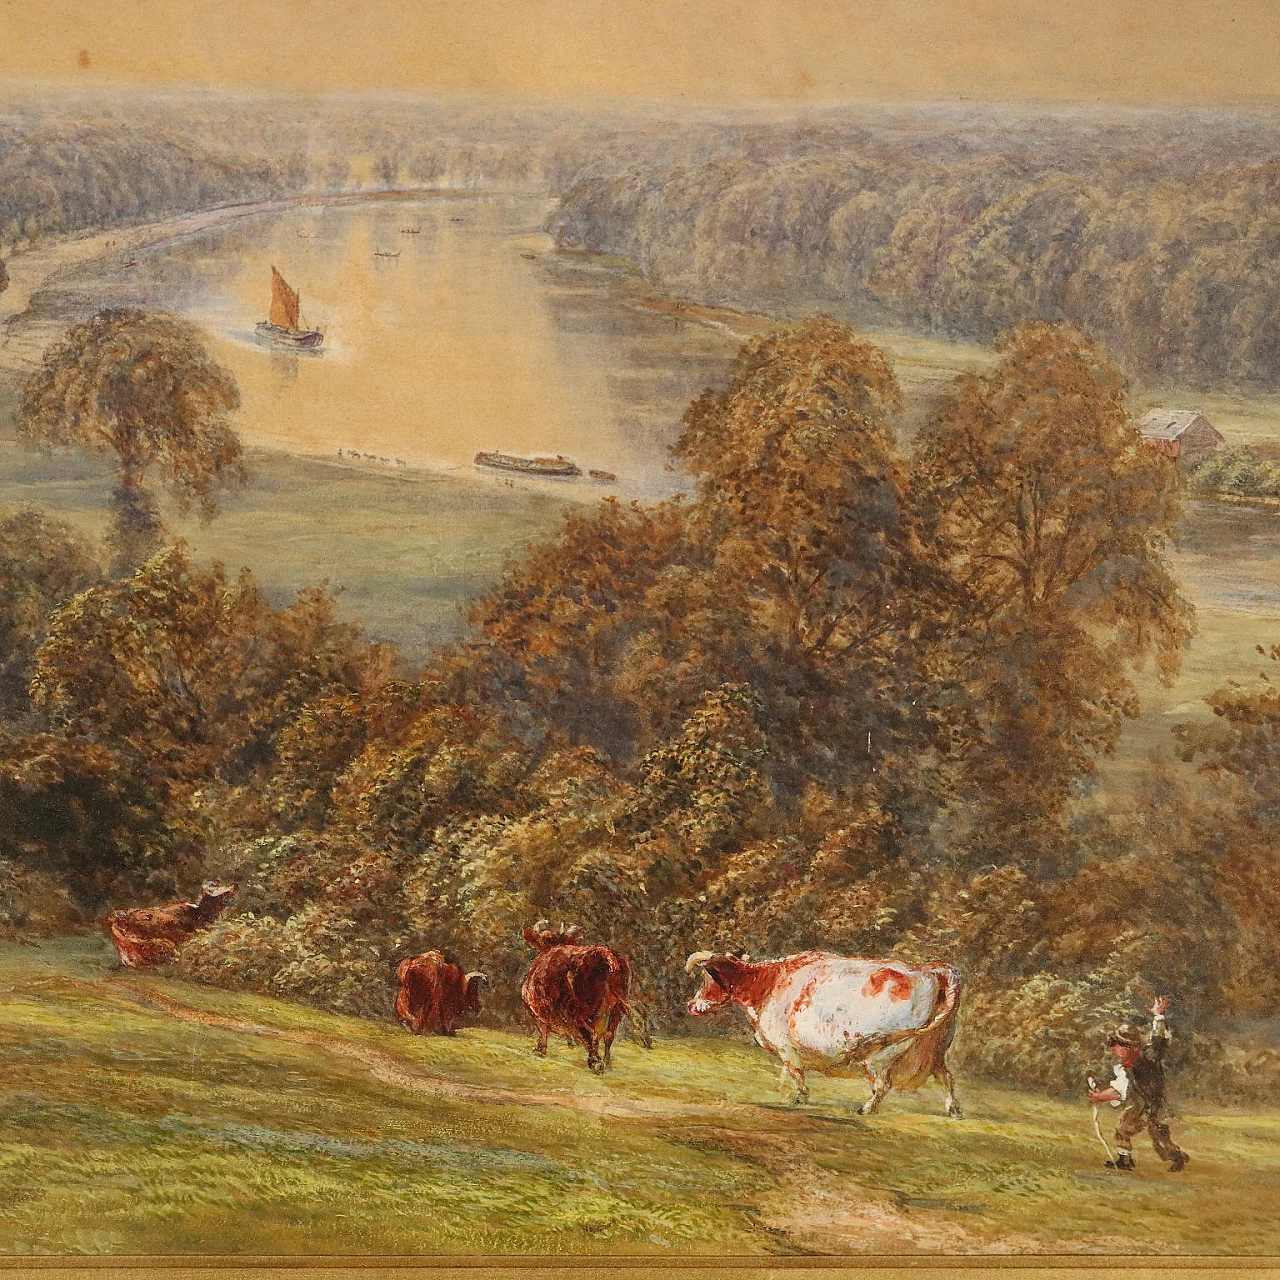 H.C. Warren, River landscape with lumberjacks, watercolor, 1878 3